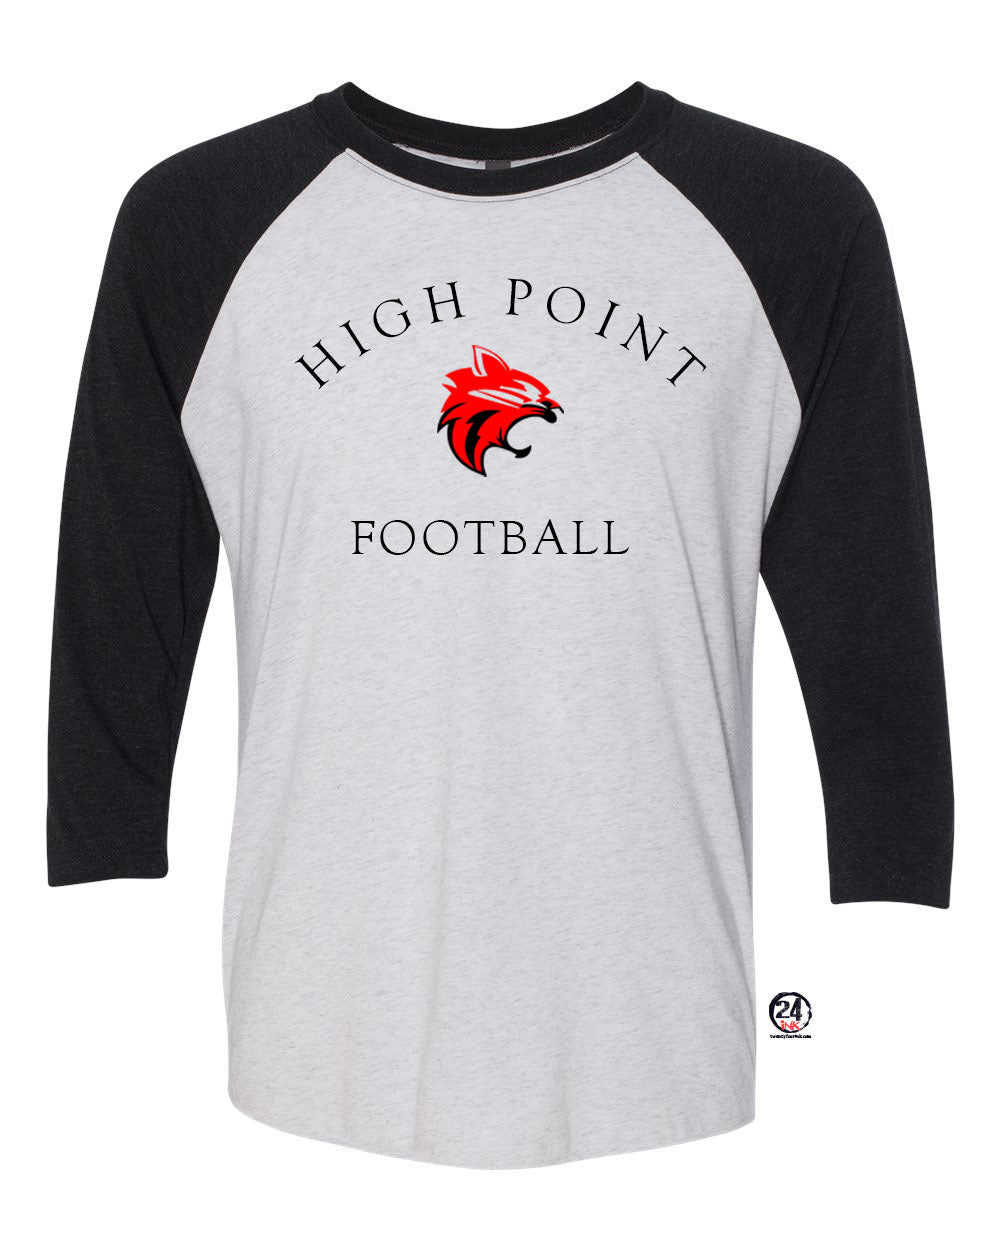 High Point Football design 3 raglan shirt